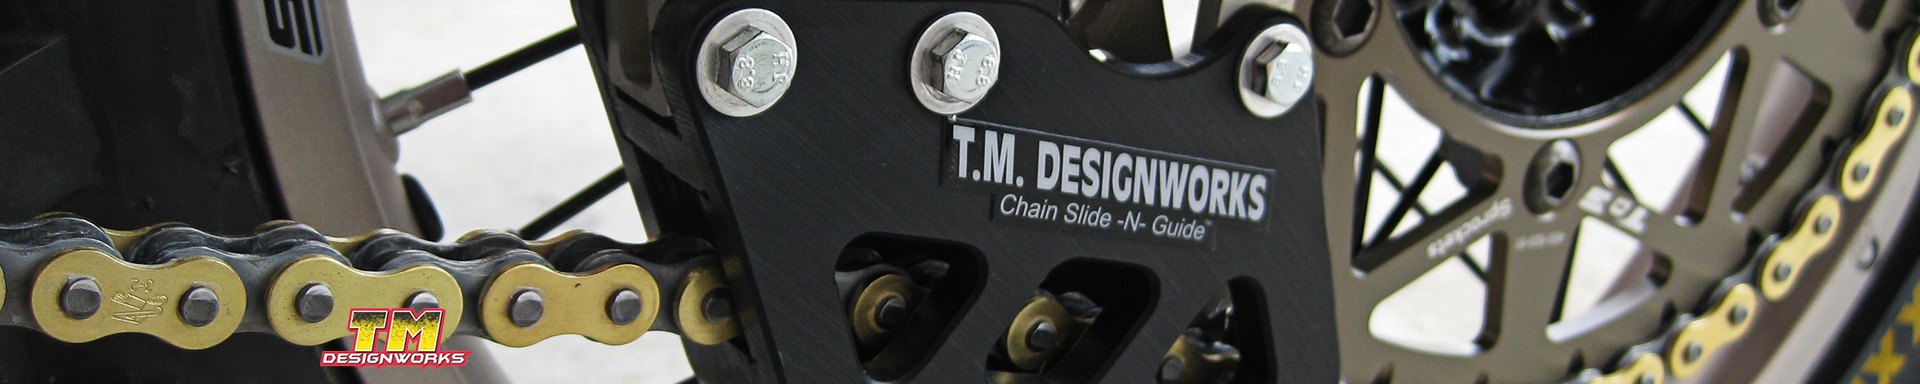 TM Designworks Brake Parts